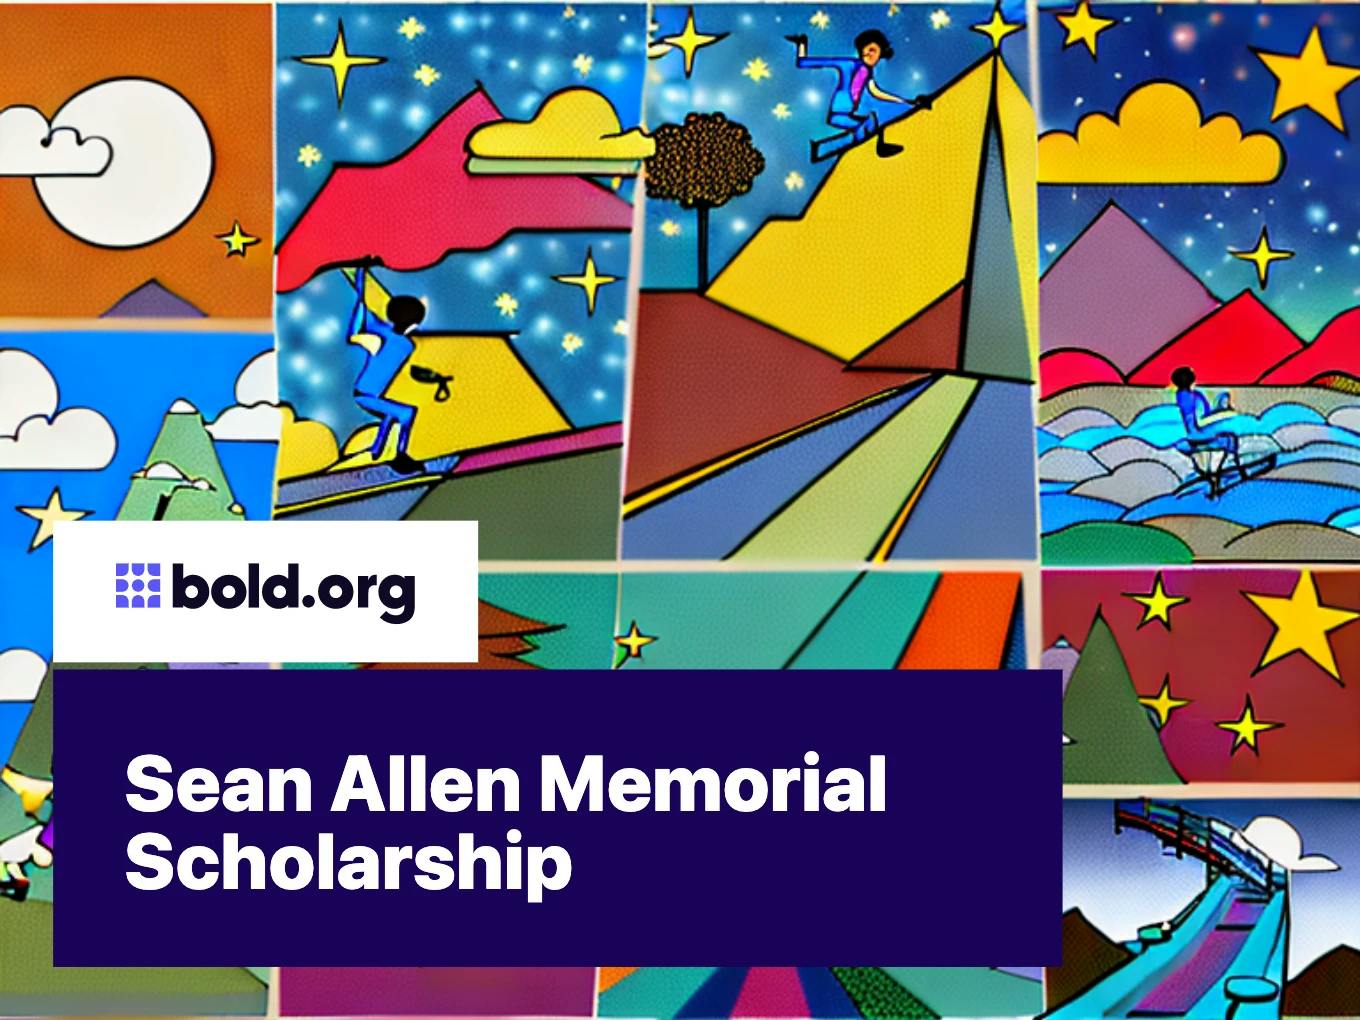 Sean Allen Memorial Scholarship